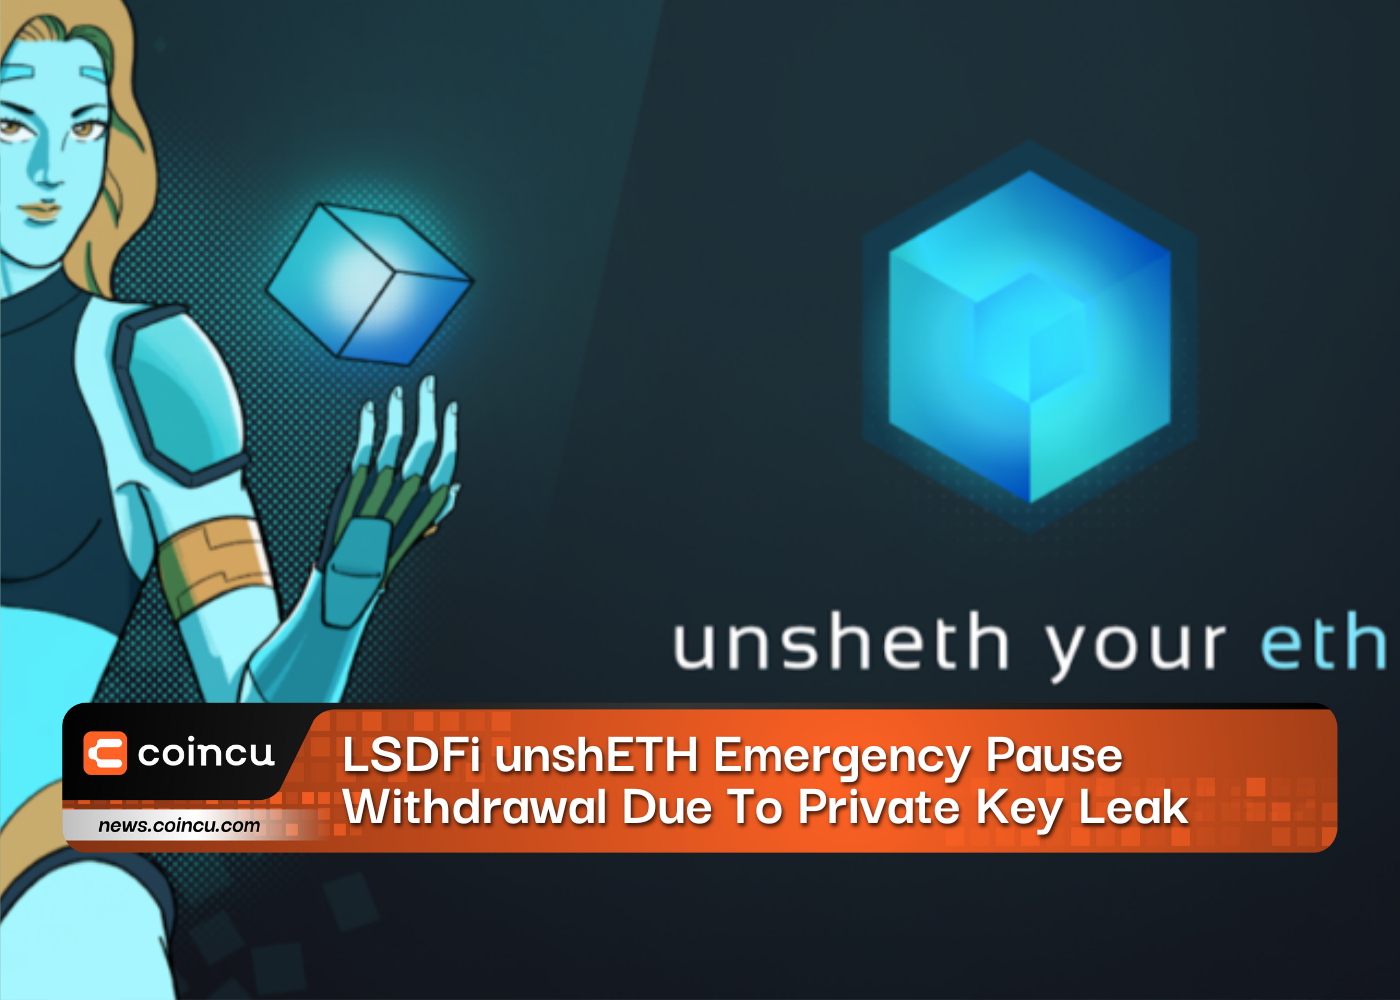 LSDFi unshETH Emergency Pause Withdrawal Due To Private Key Leak